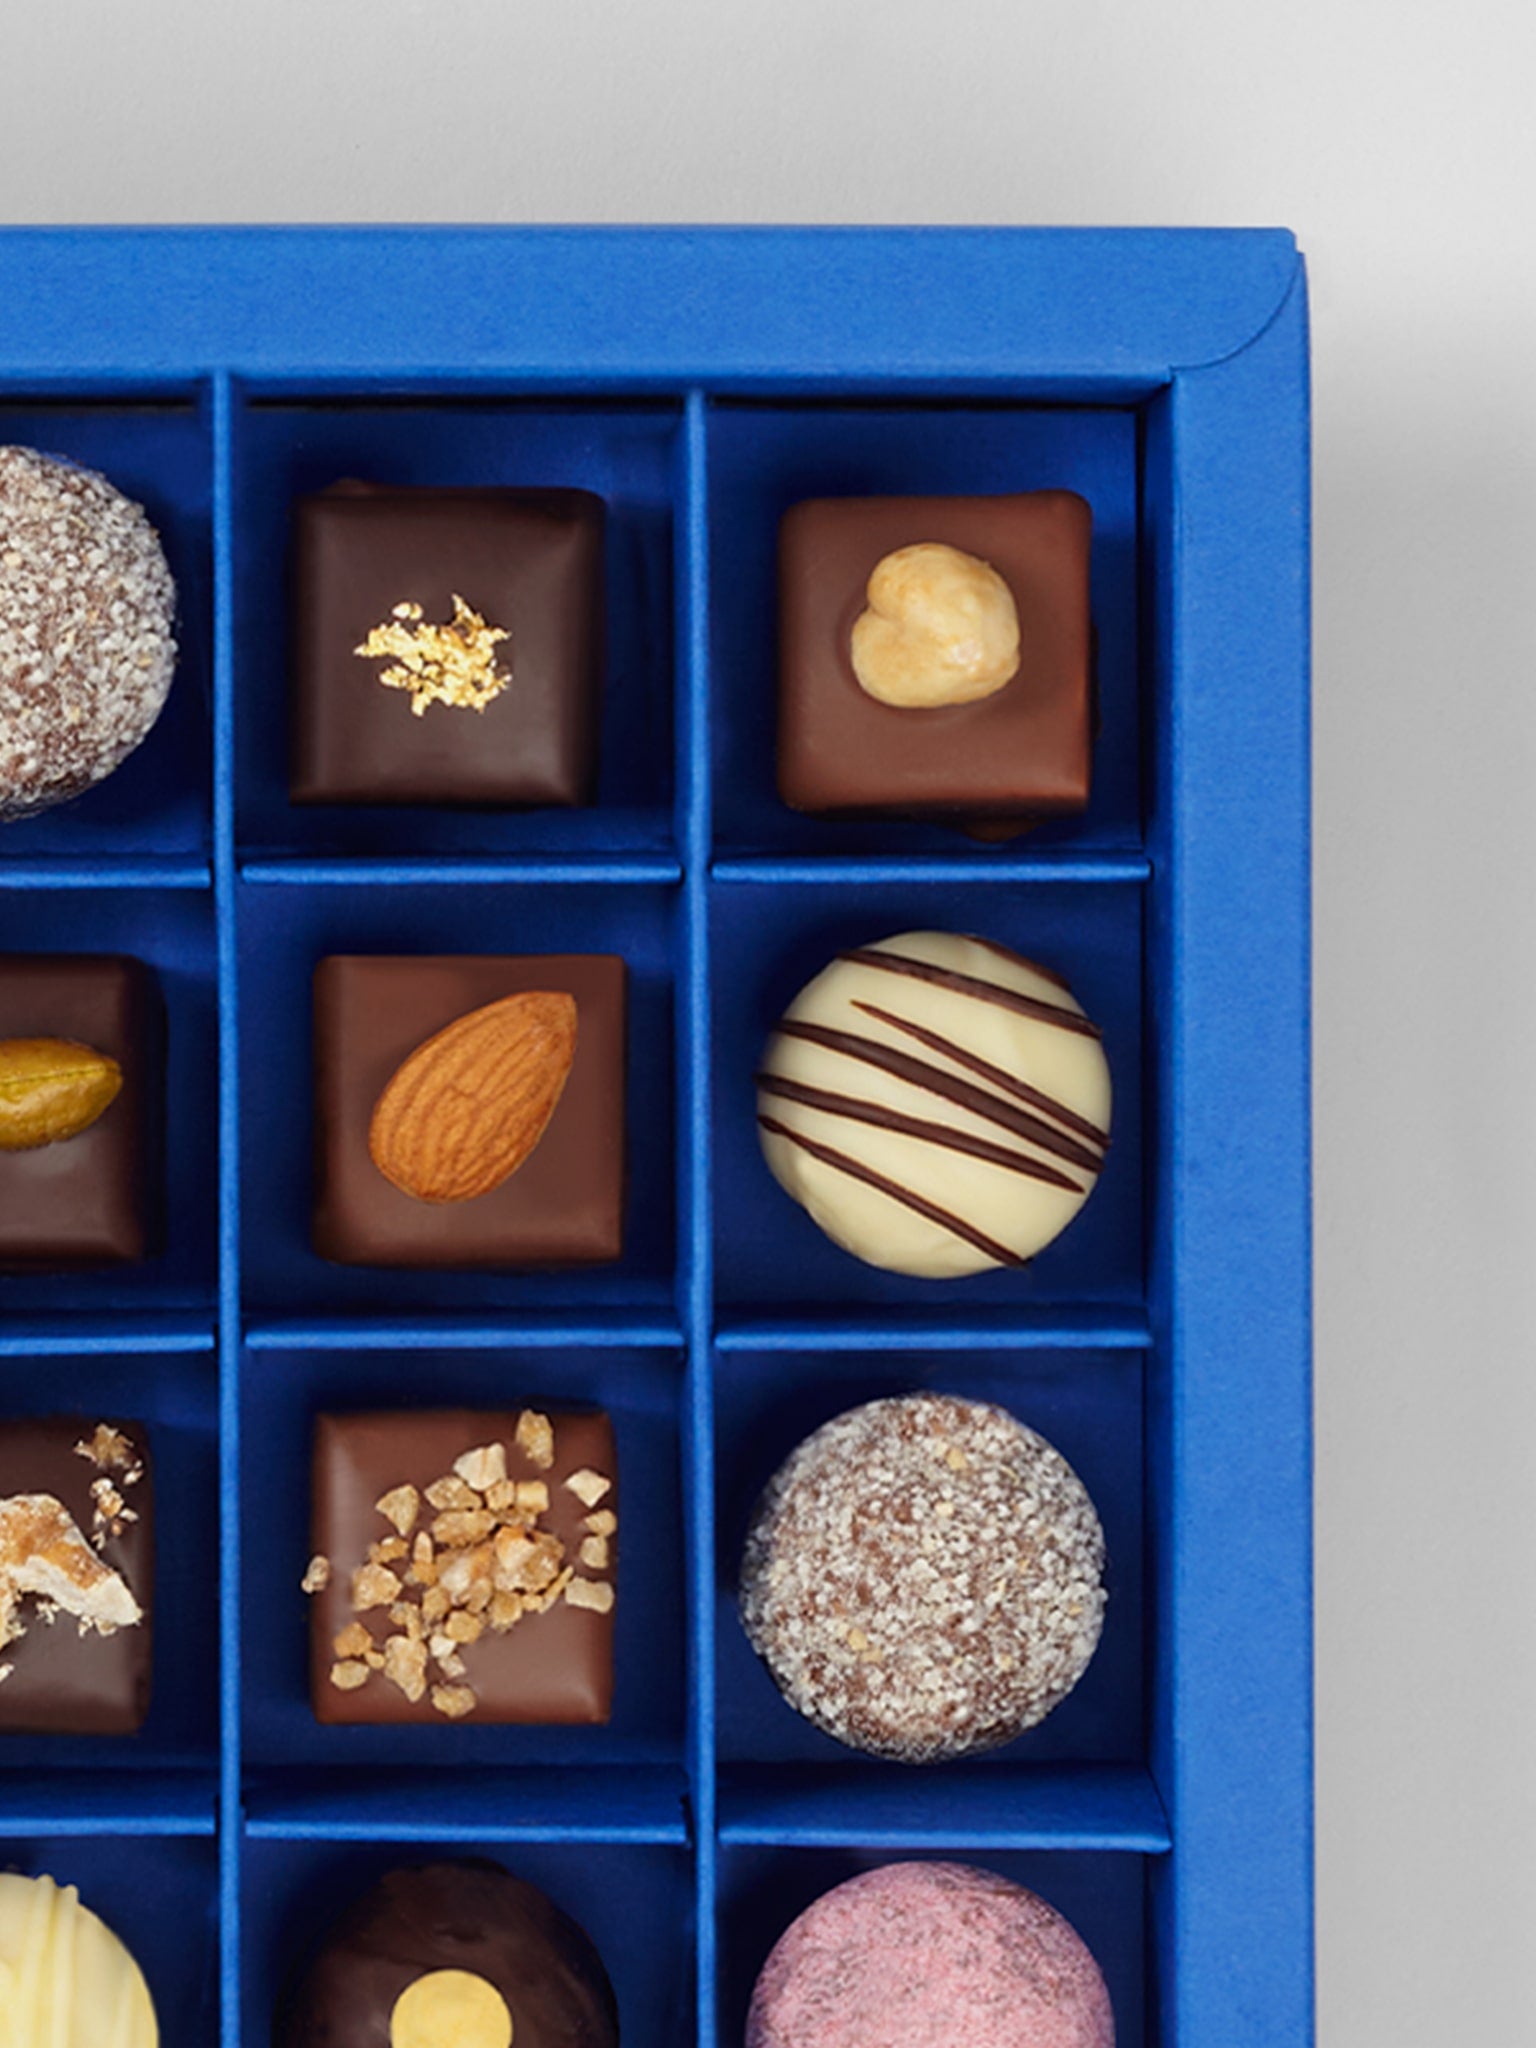 KSC LOVE Box Medium with 16 chocolates 